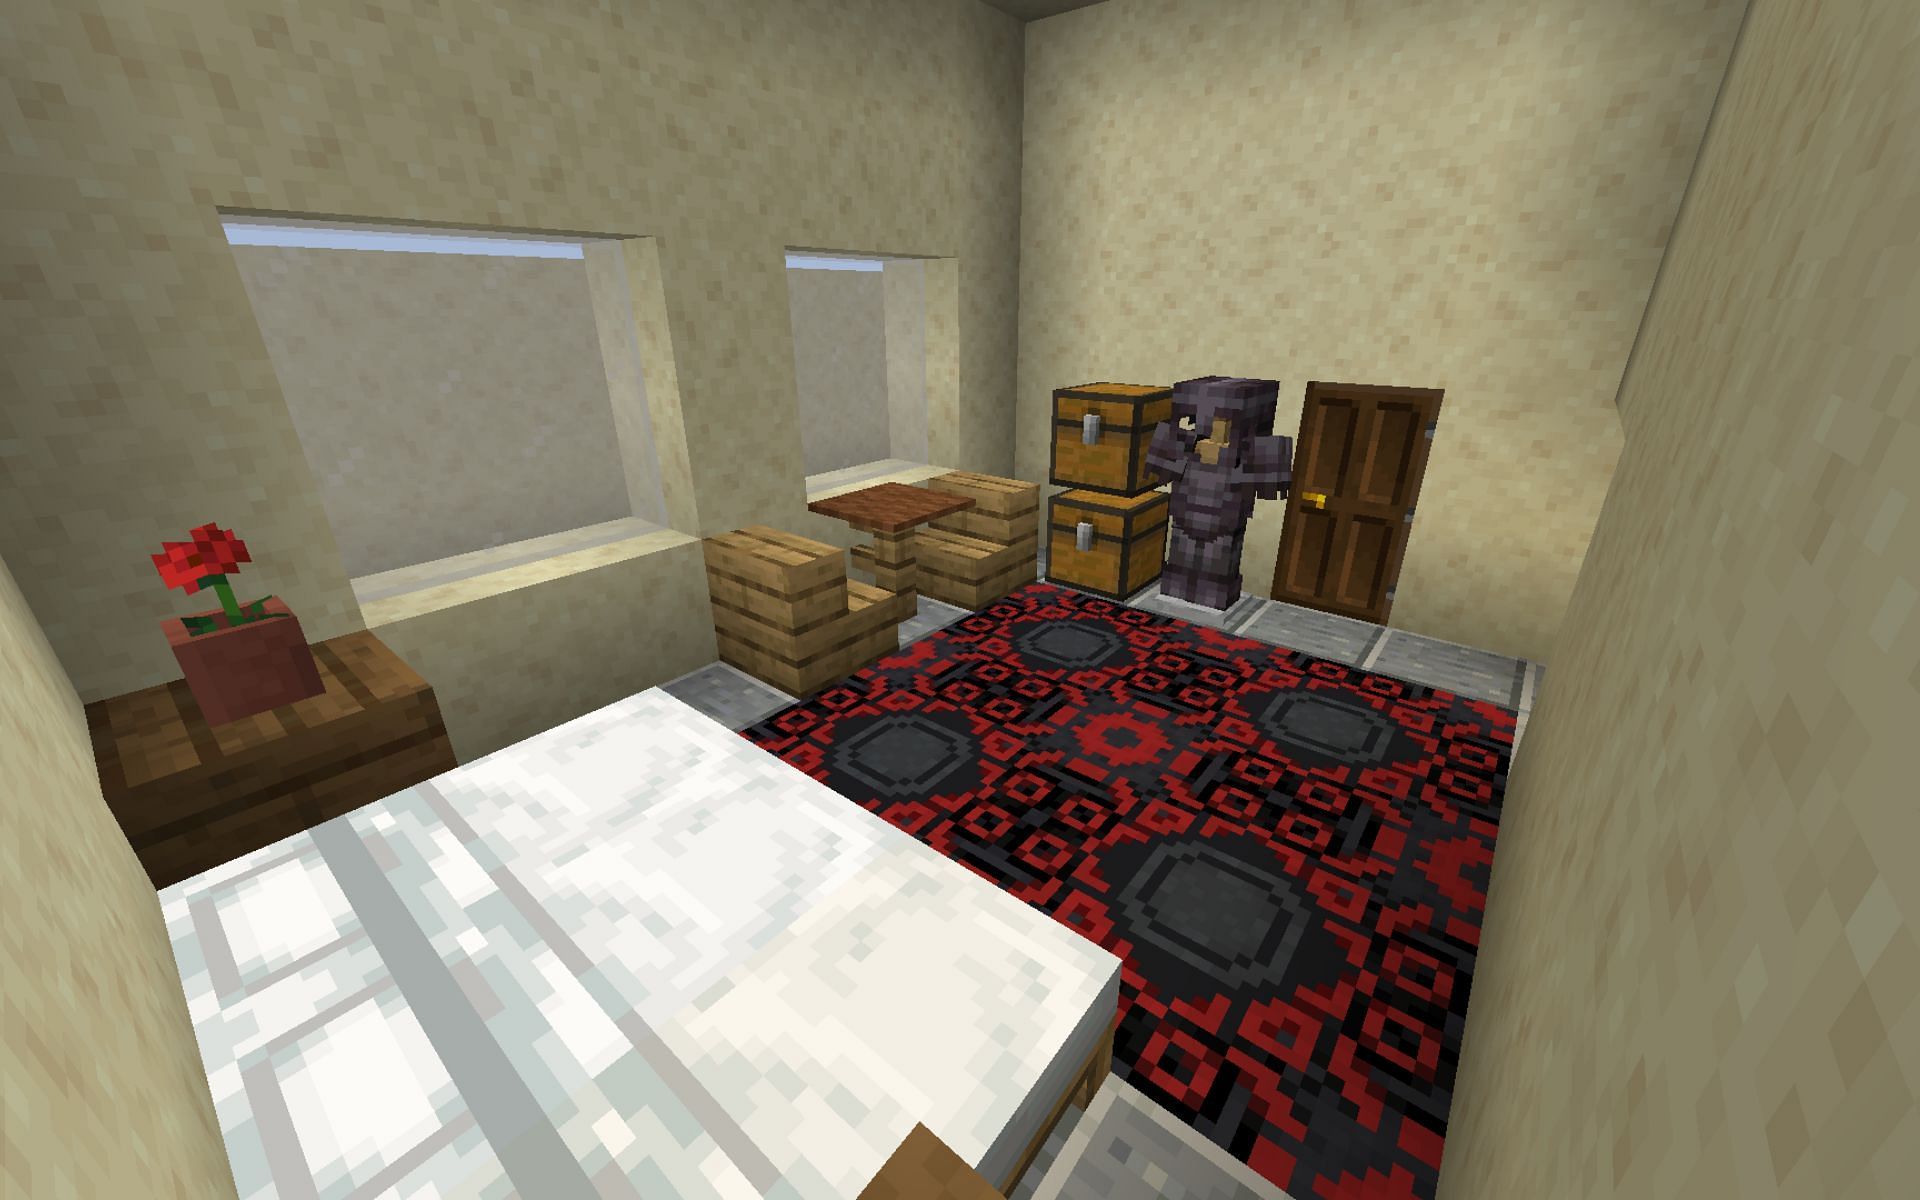 A decorated bedroom (Image via Minecraft)